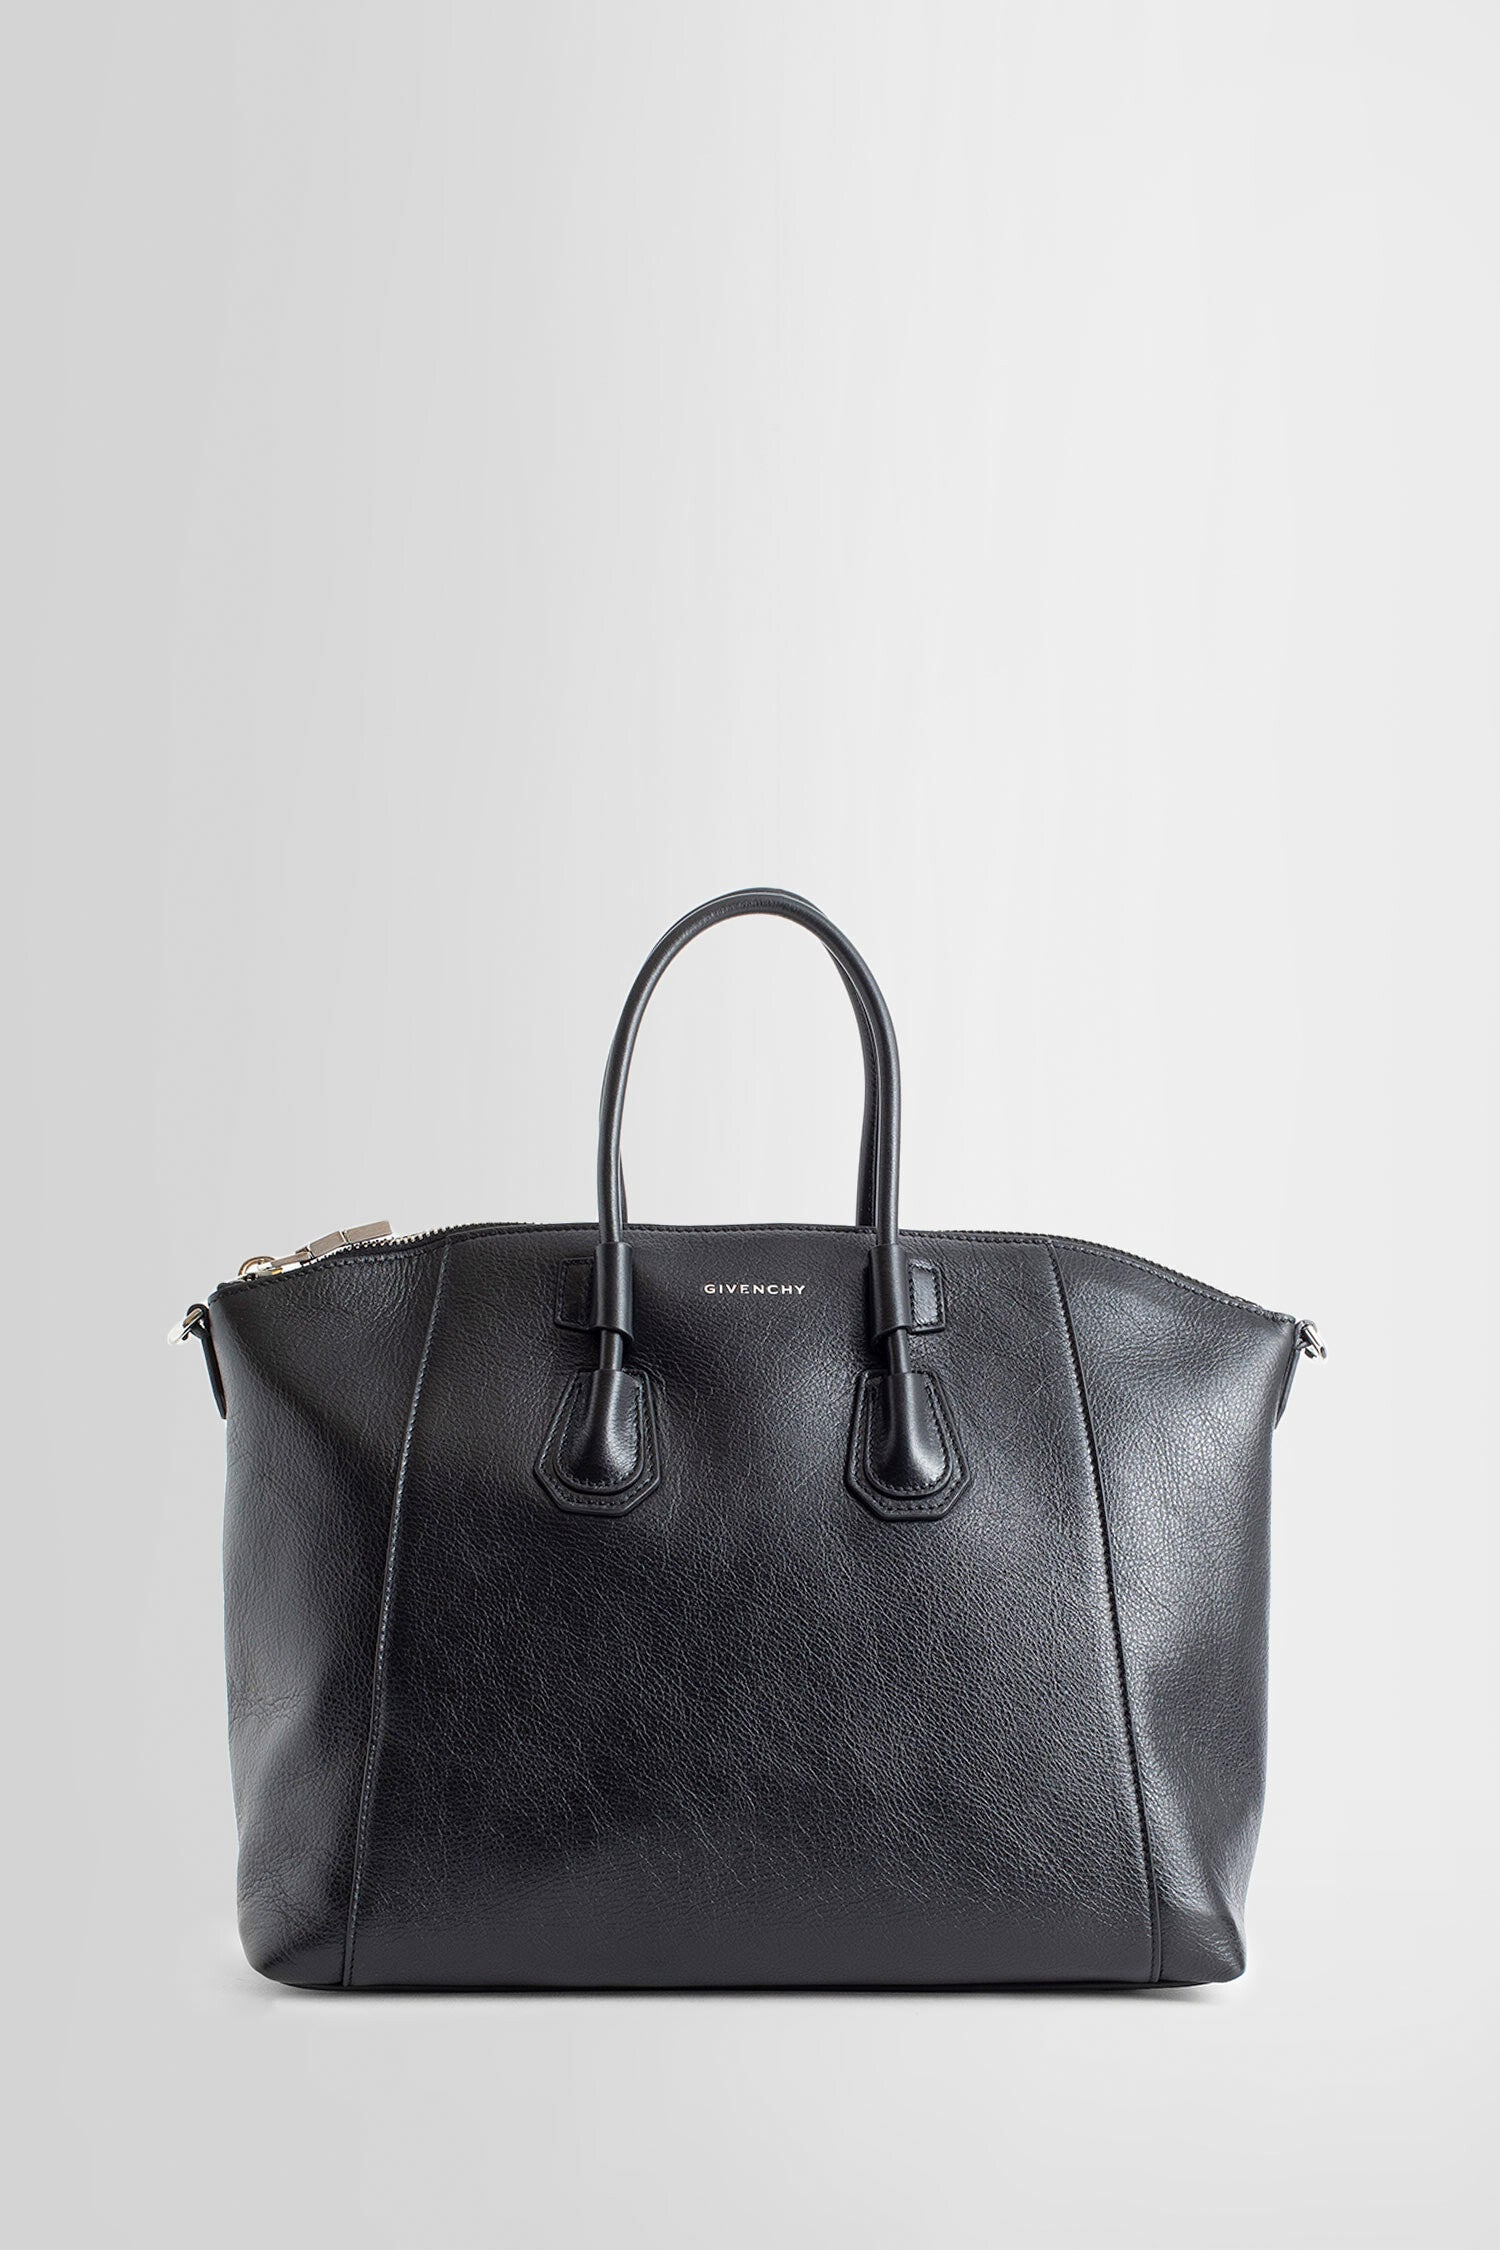 Givenchy, Bags, Givenchy Antigona Gm Clutch